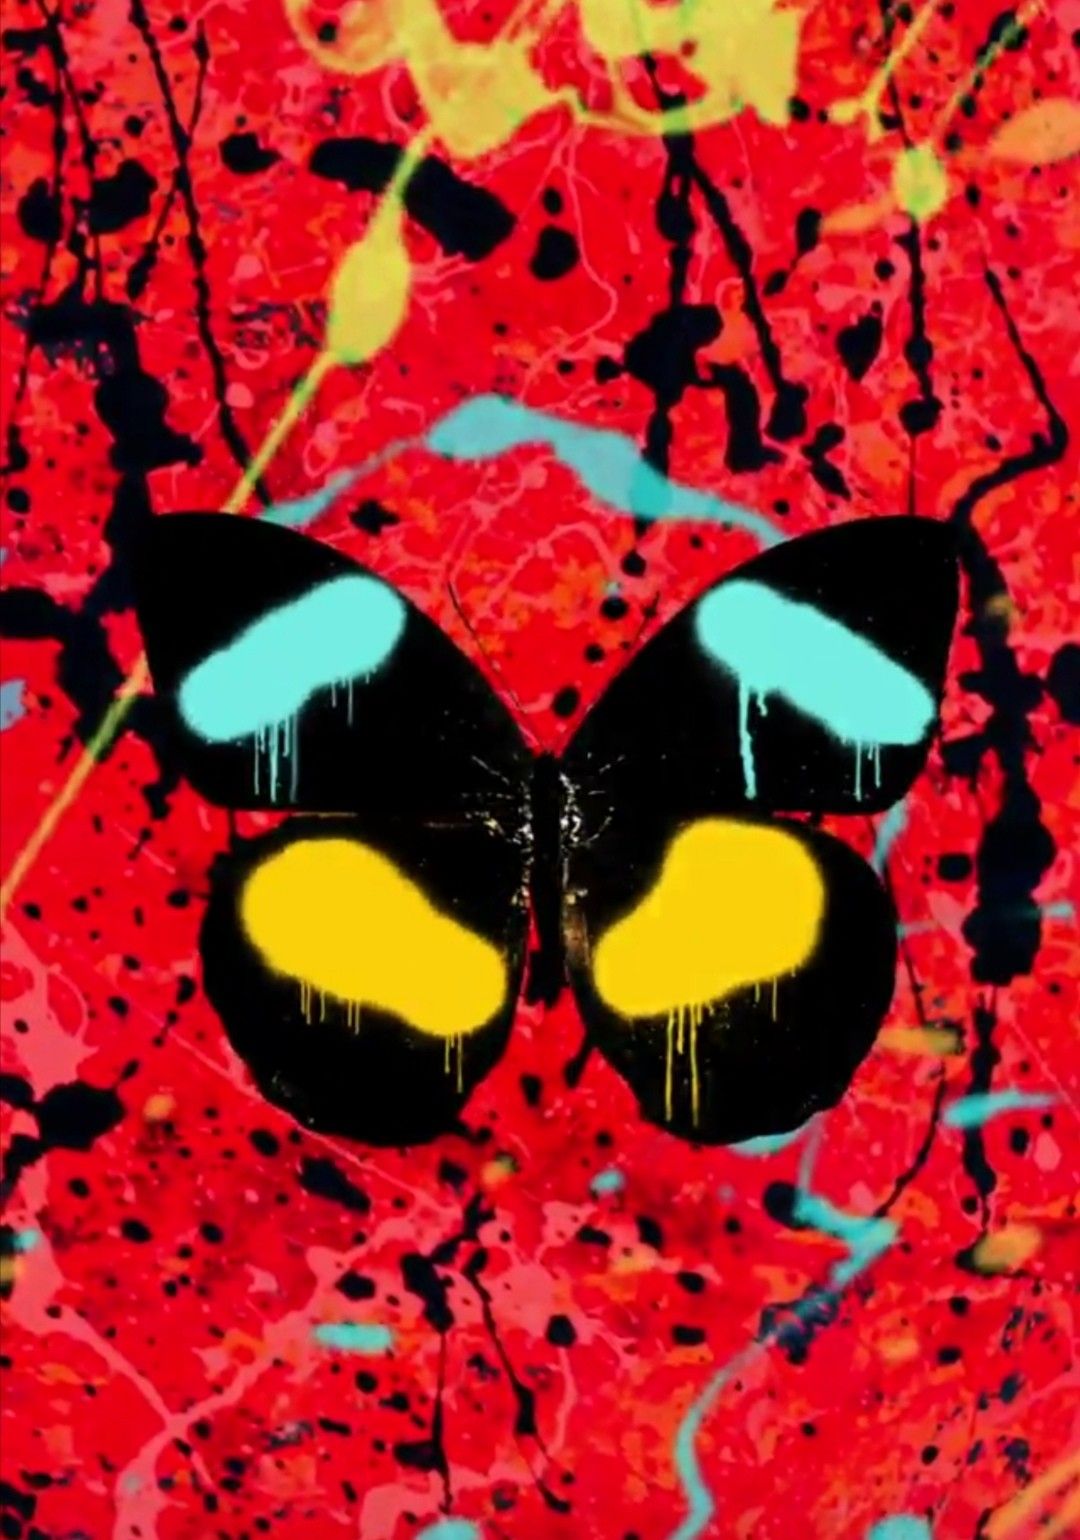 Overpass Graffiti butterfly. Beautiful wallpaper background, Graffiti, Ed sheeran